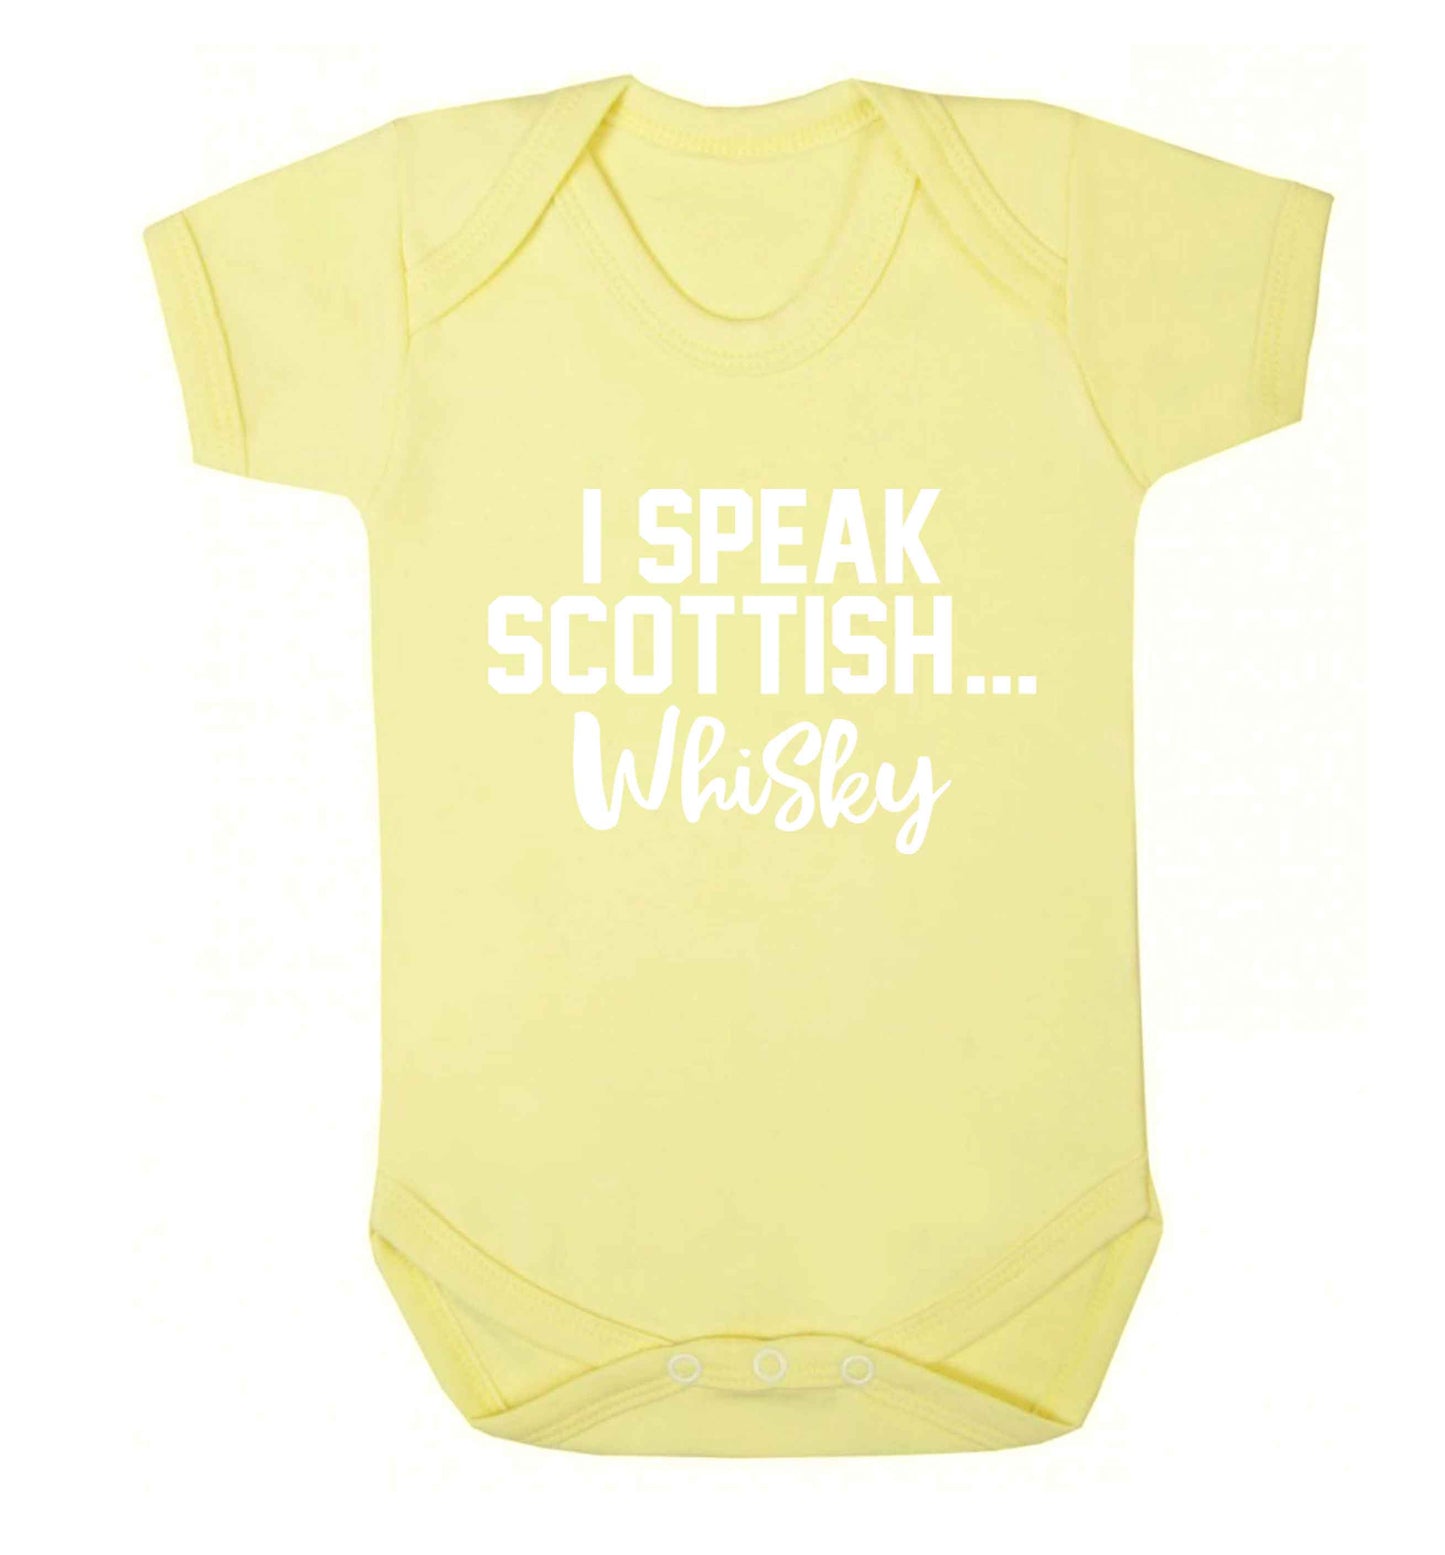 I speak scottish...whisky Baby Vest pale yellow 18-24 months